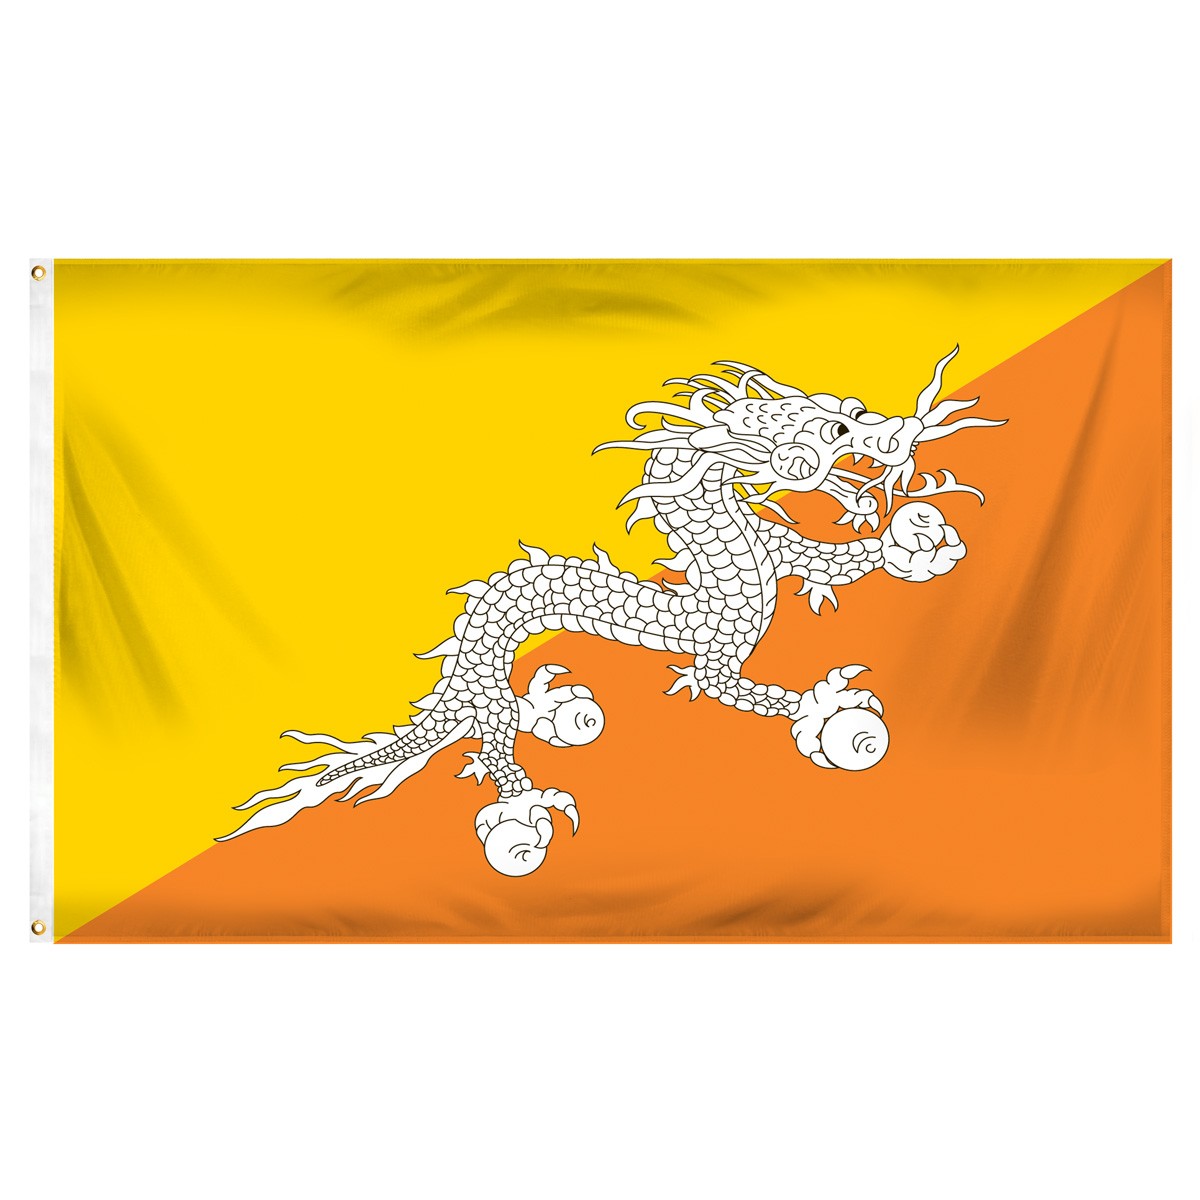 Bhutan Building Pennants and Flags